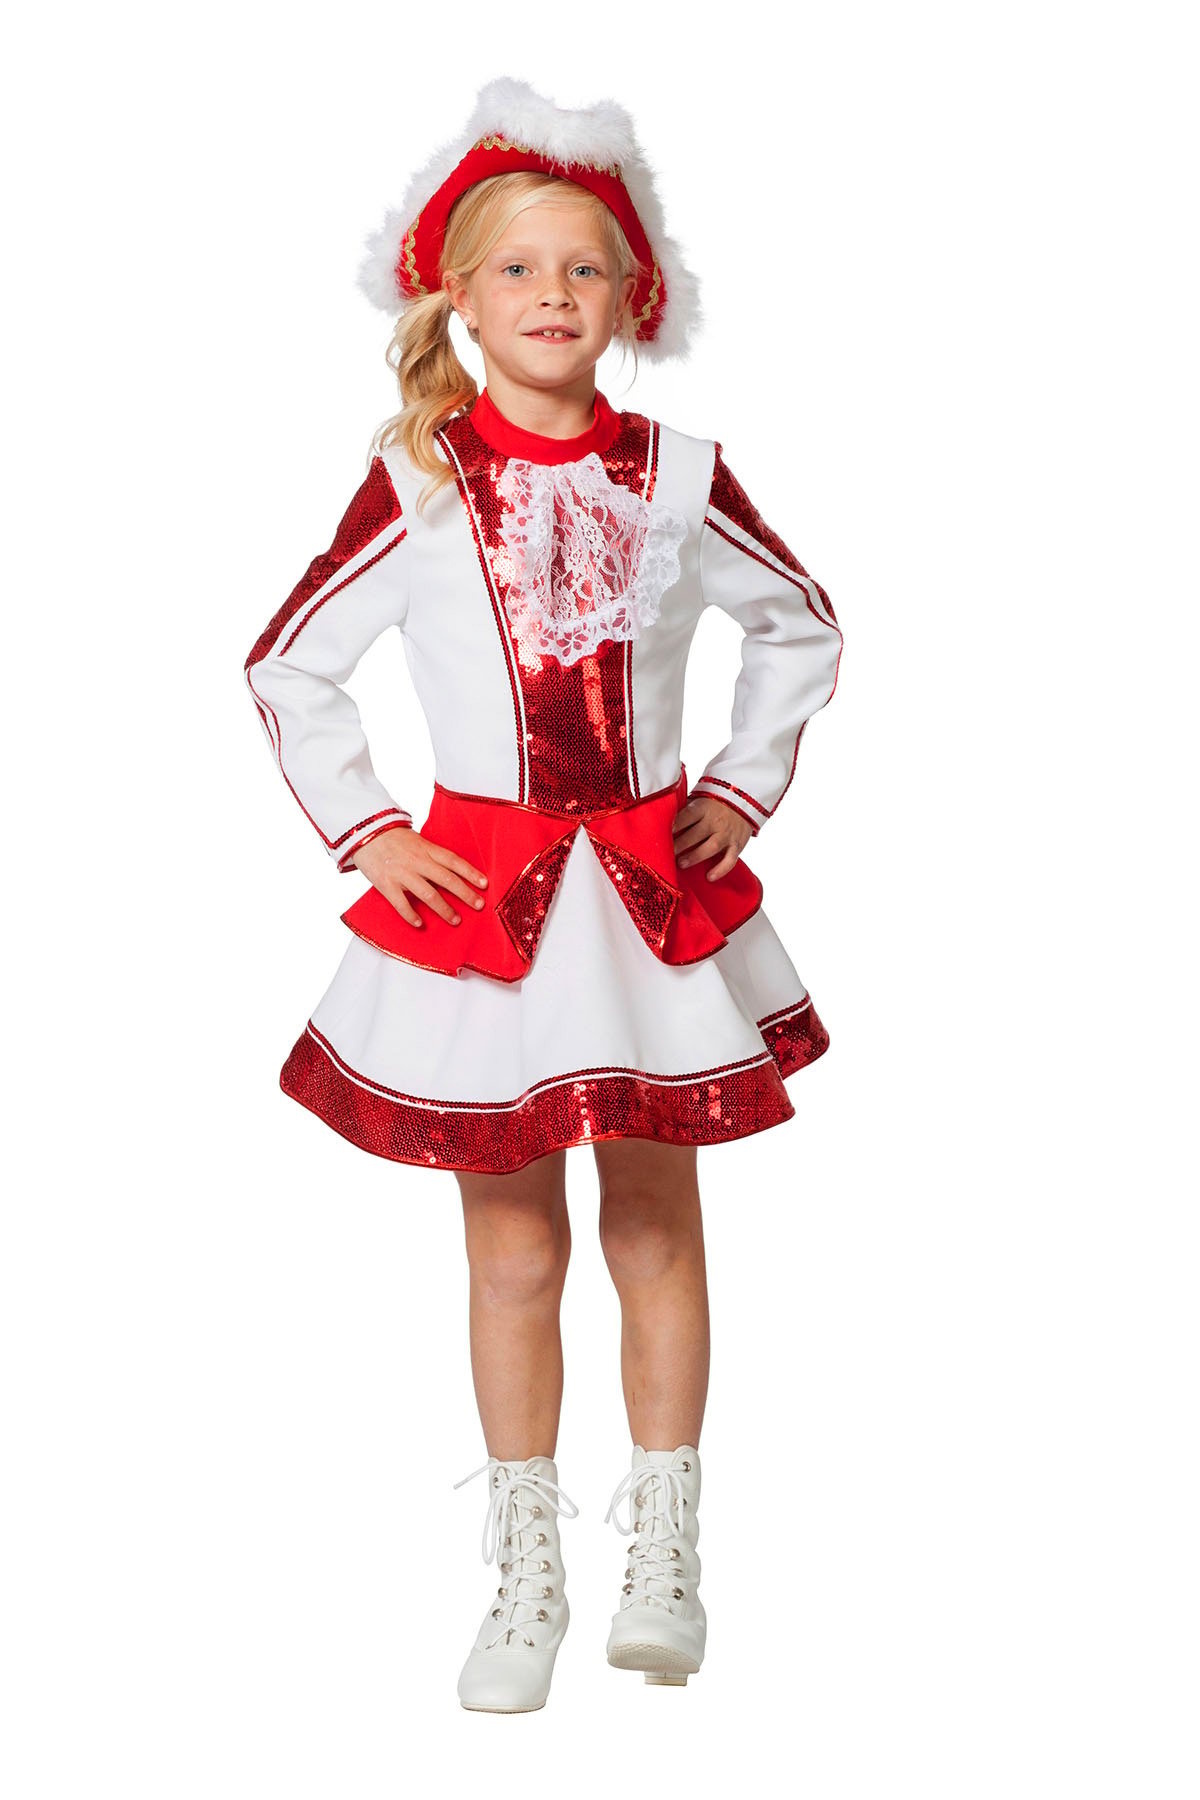 Disfraz de Majorette Infantil Vestido Blanco y Rojo Niña